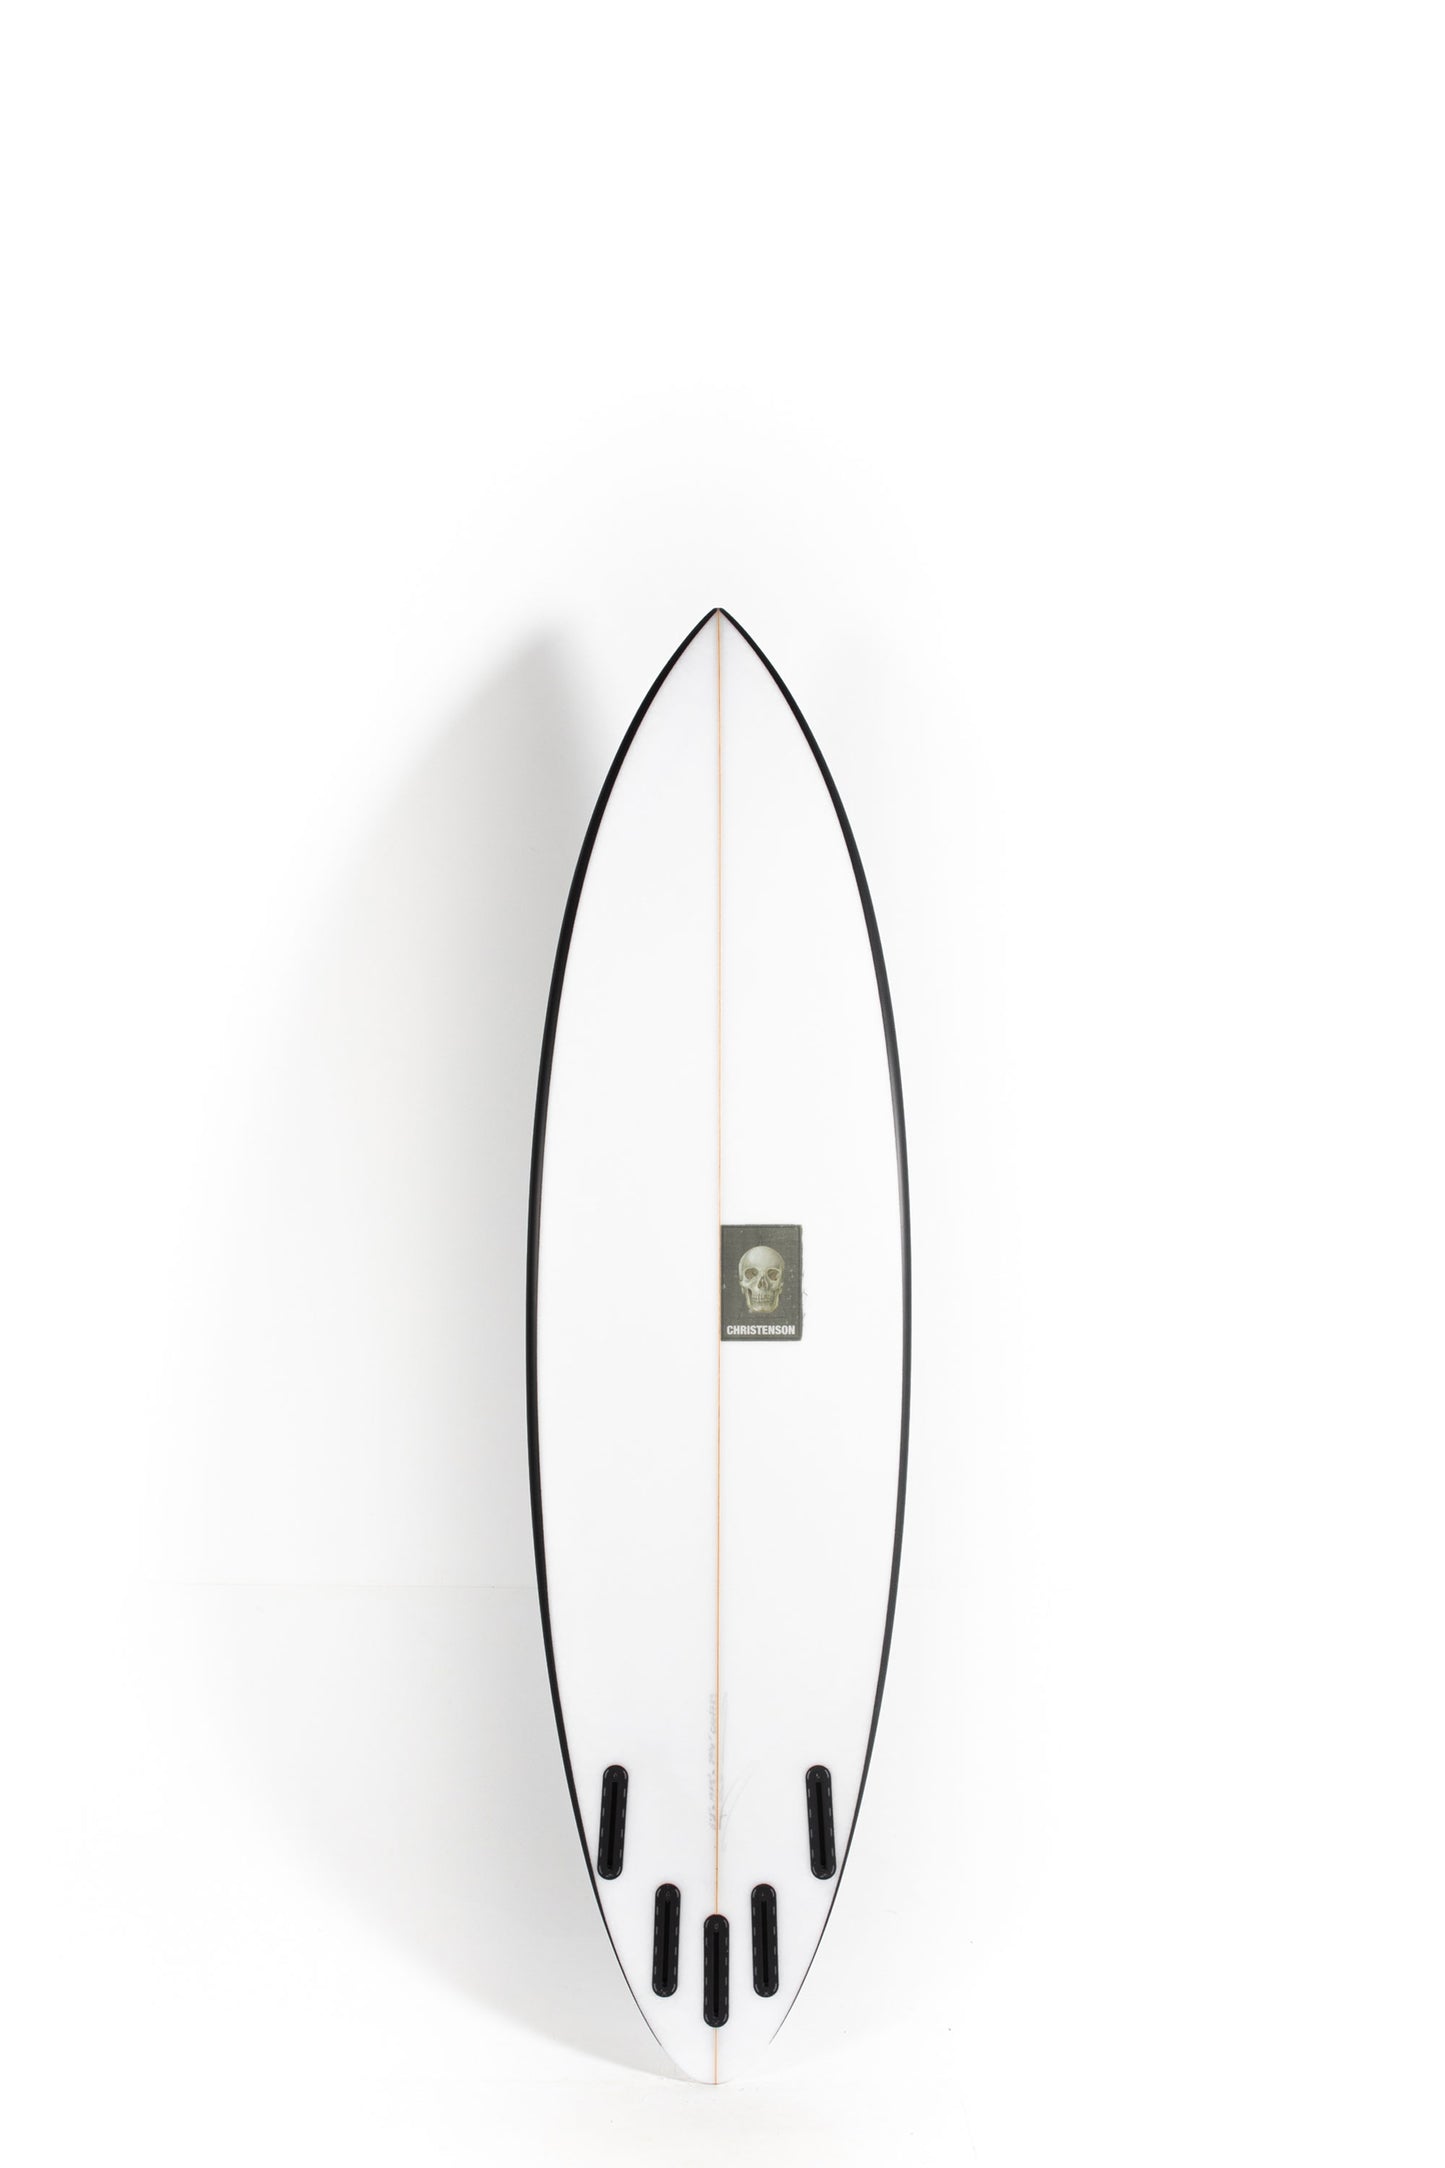 Pukas Surf Shop - Christenson Surfboards - CARRERA - 6'4" x 19 3/8 x 2 9/16 - 34,4L - CX04789